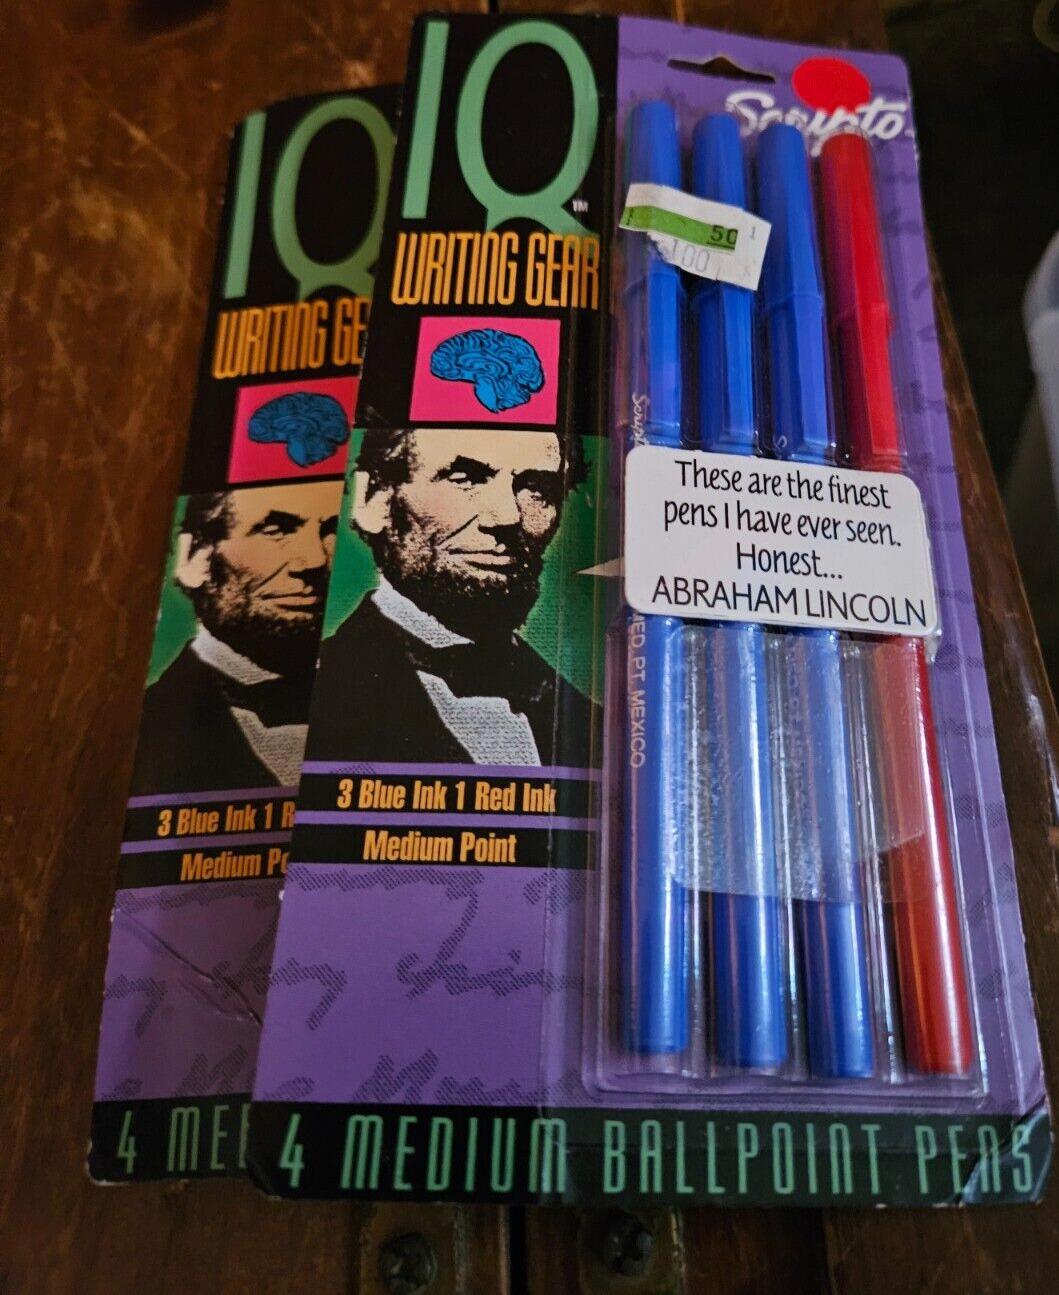 Vintage Scripto IQ Writing Gear 4 Medium Ballpoint Pens Pack Of 2 Colors 1993